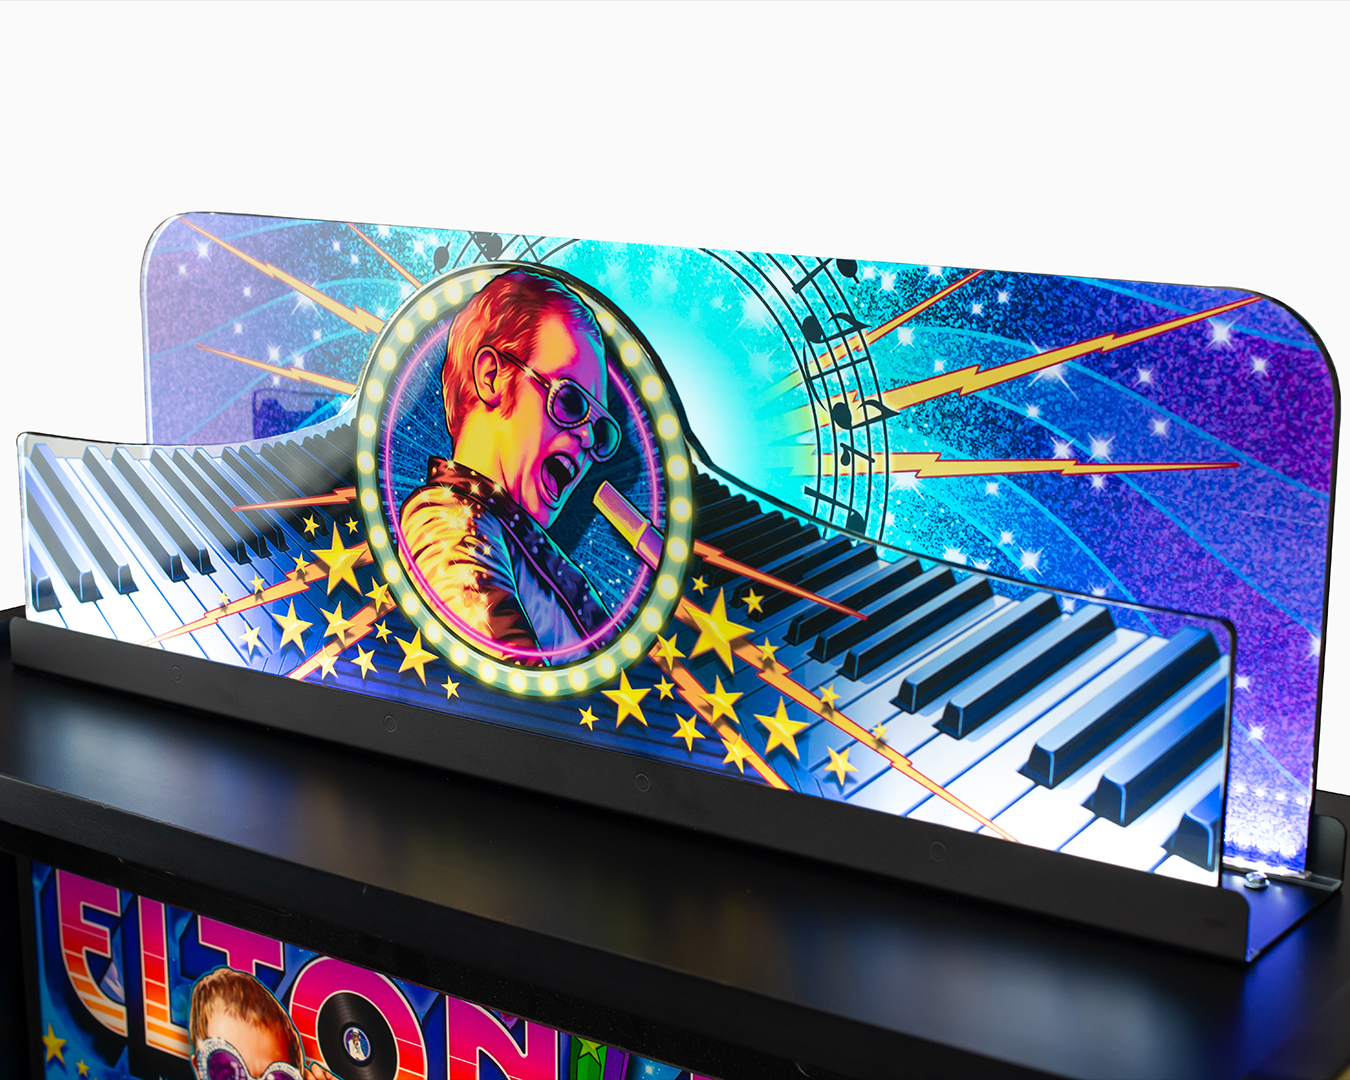 Elton John Pinball Machine - Platinum Edition